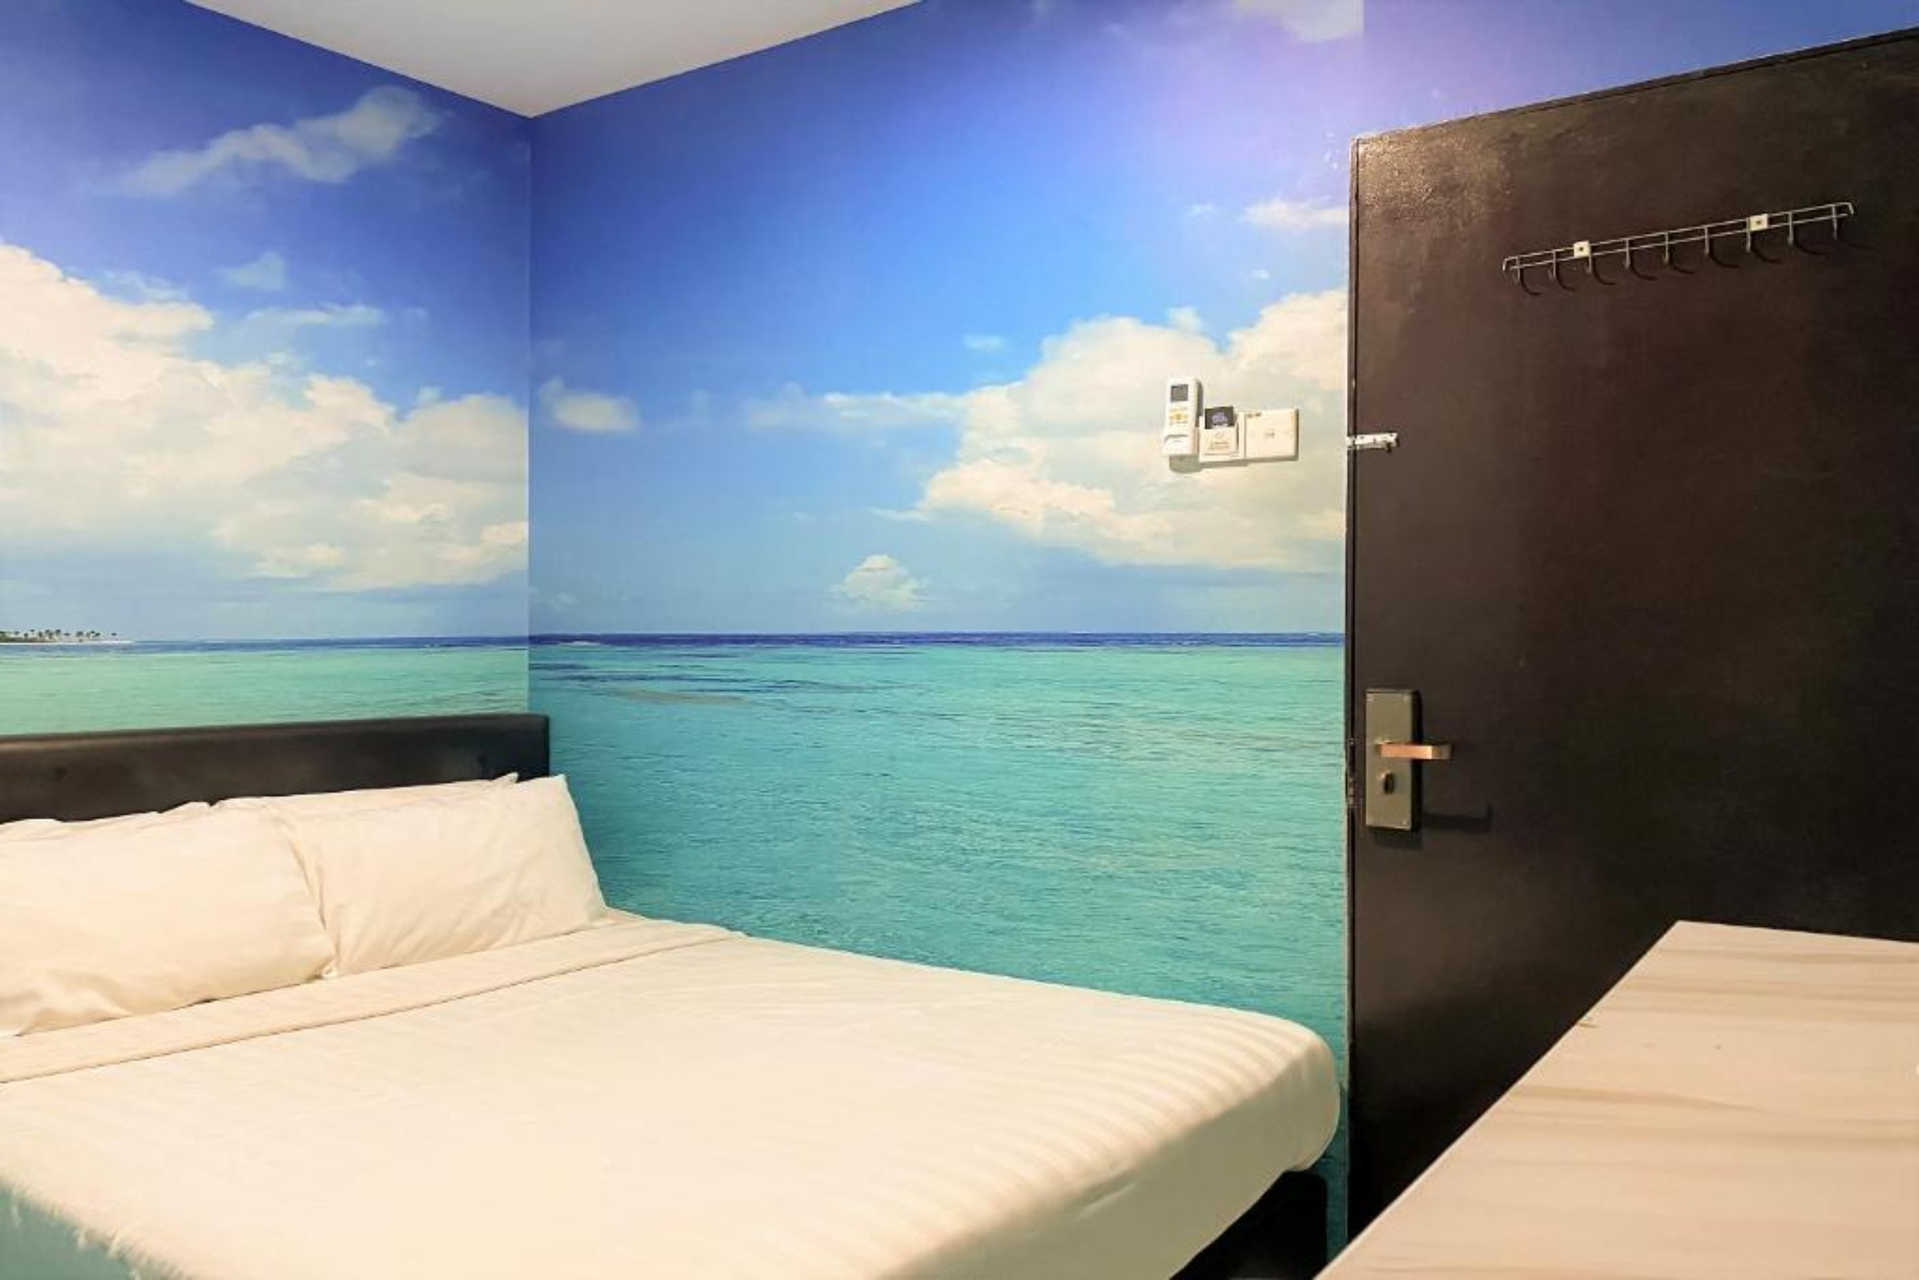 Bedroom 2, Spot on 89673 Good Friend Hotel, Pulau Penang